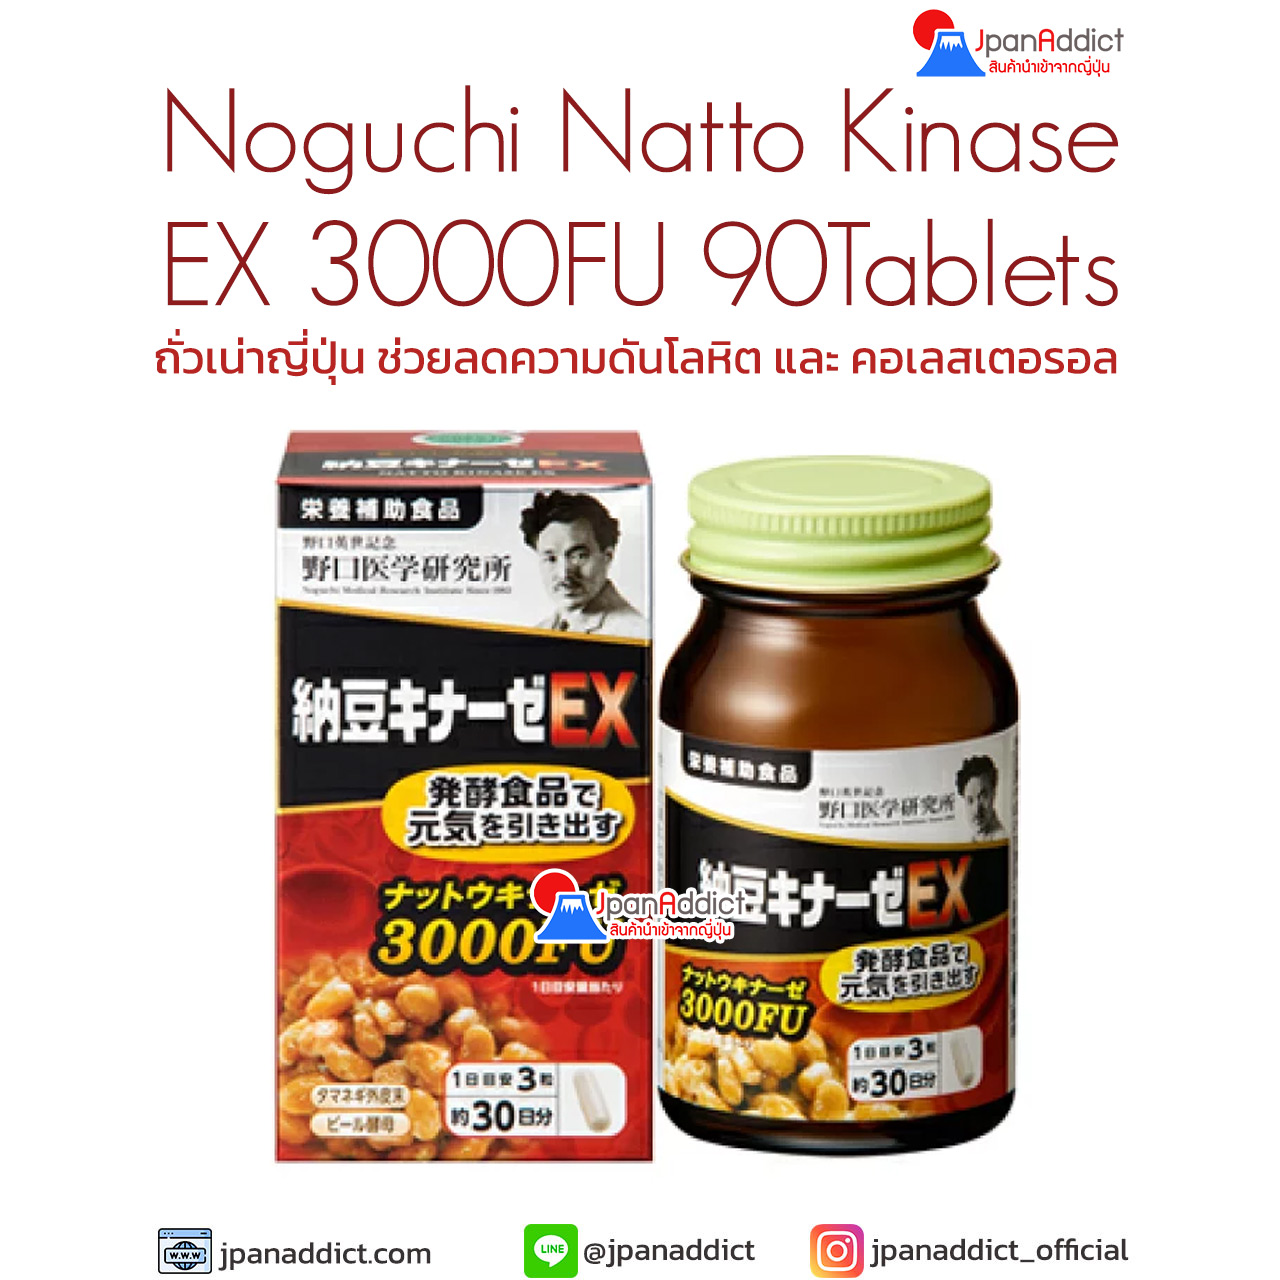 Noguchi Natto Kinase EX 3000FU 90 Tablets